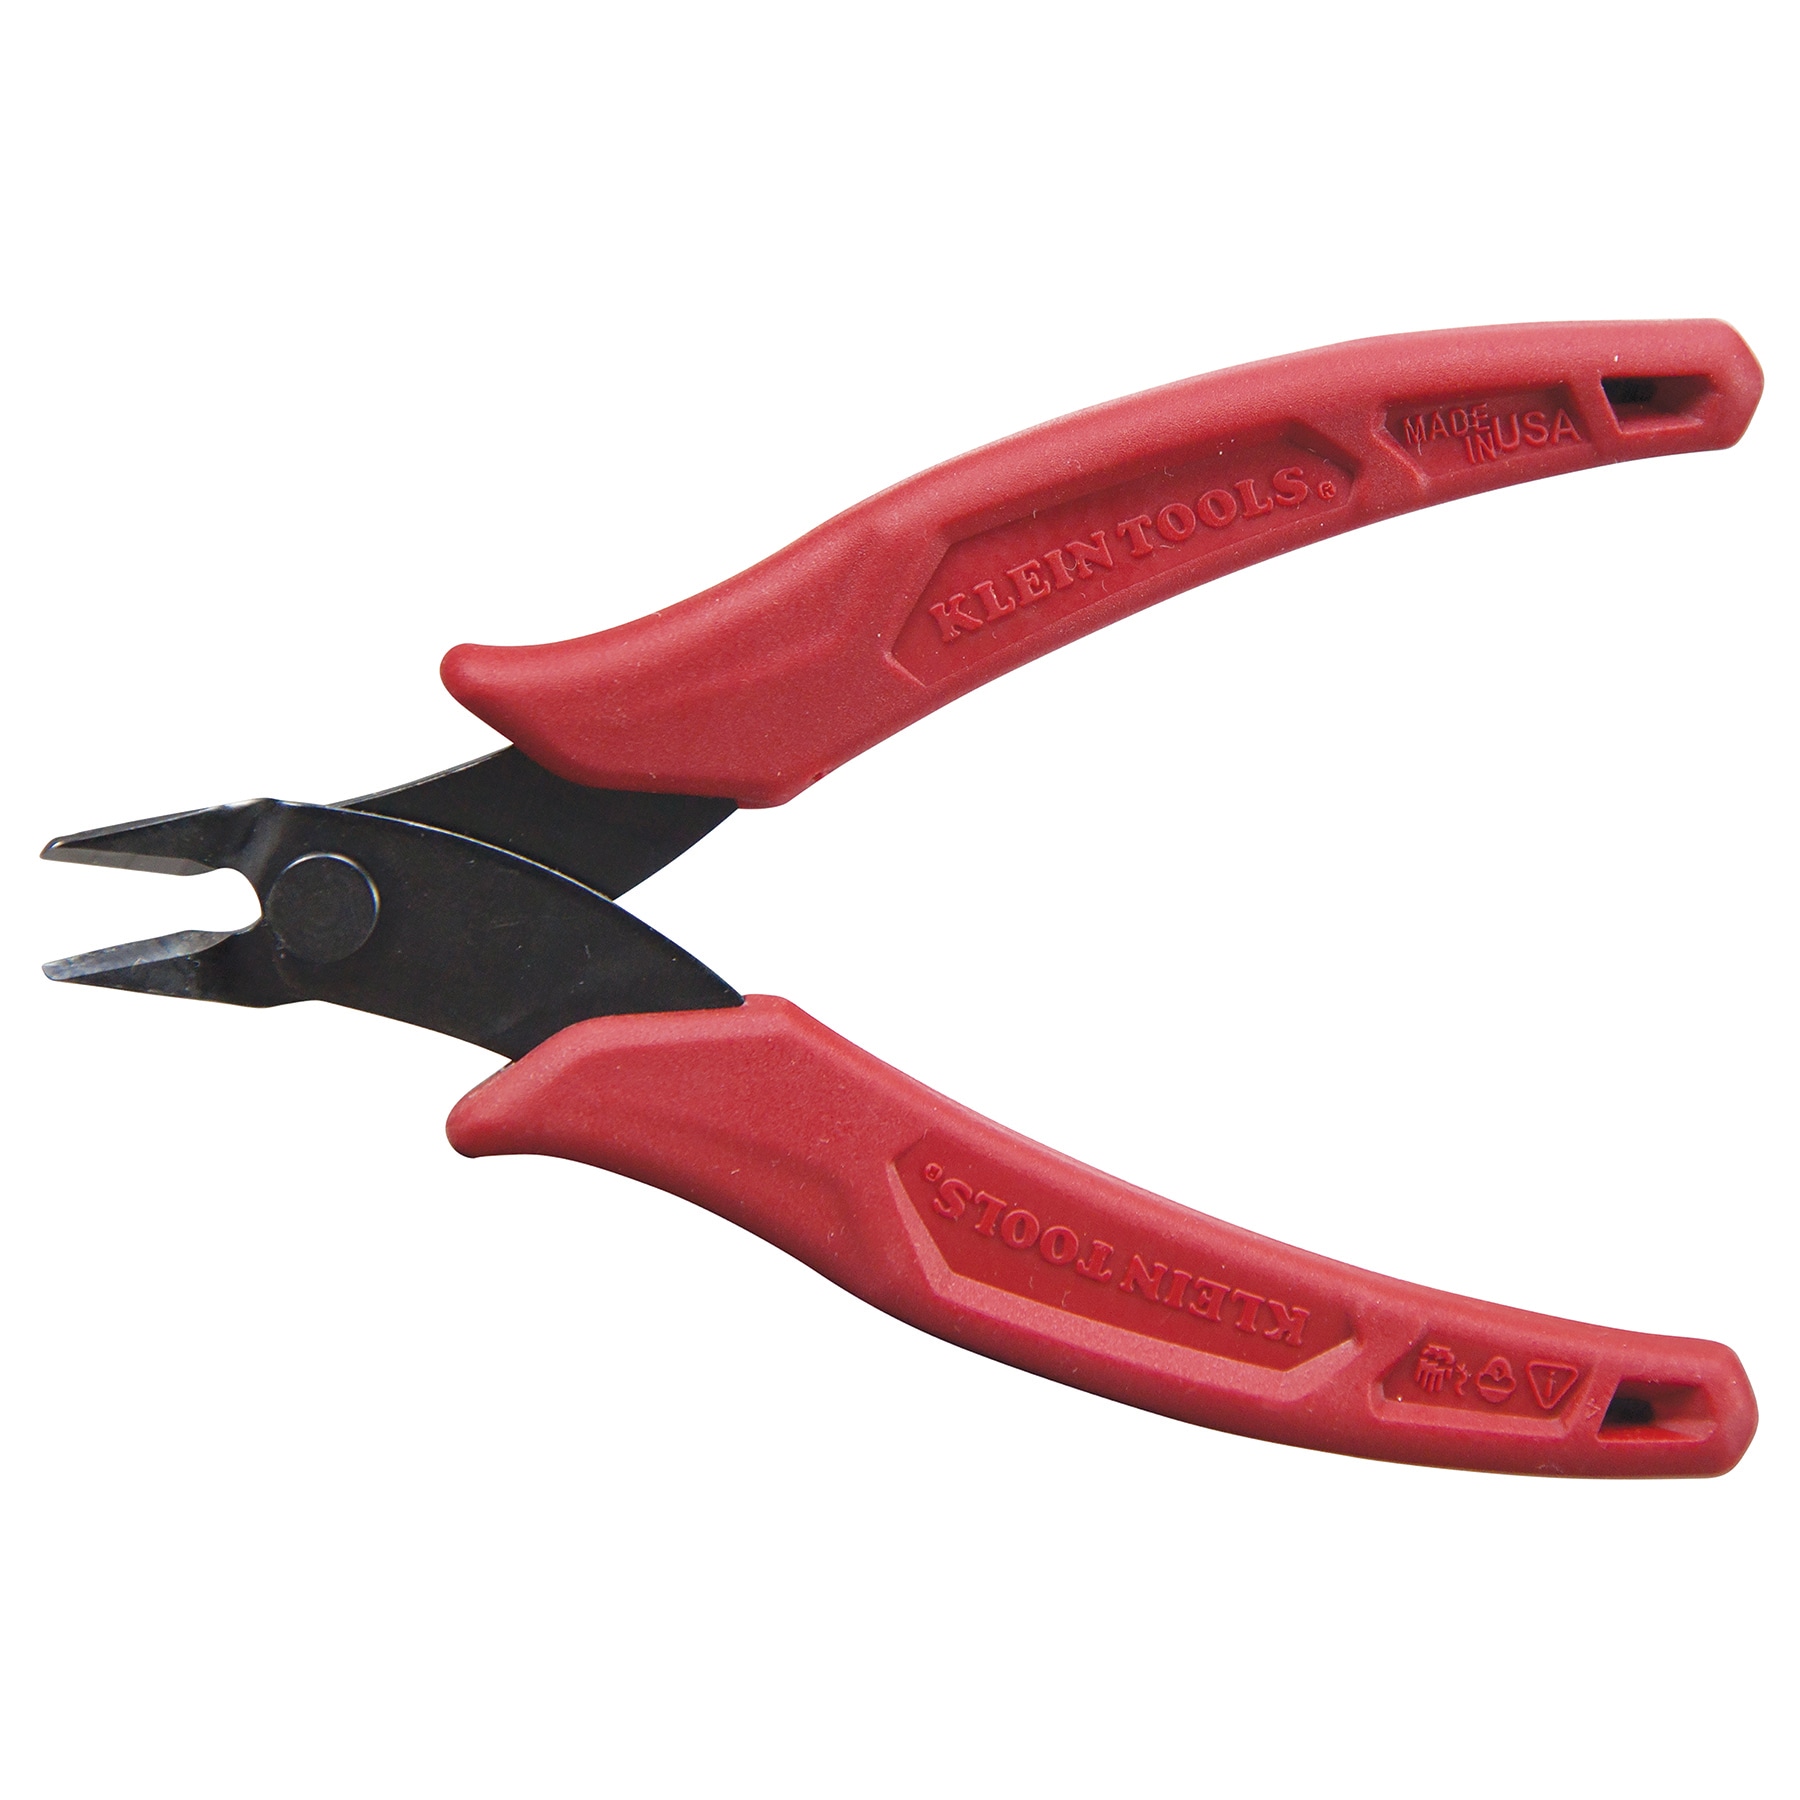  Plastic Cutter Tool : Tools & Home Improvement